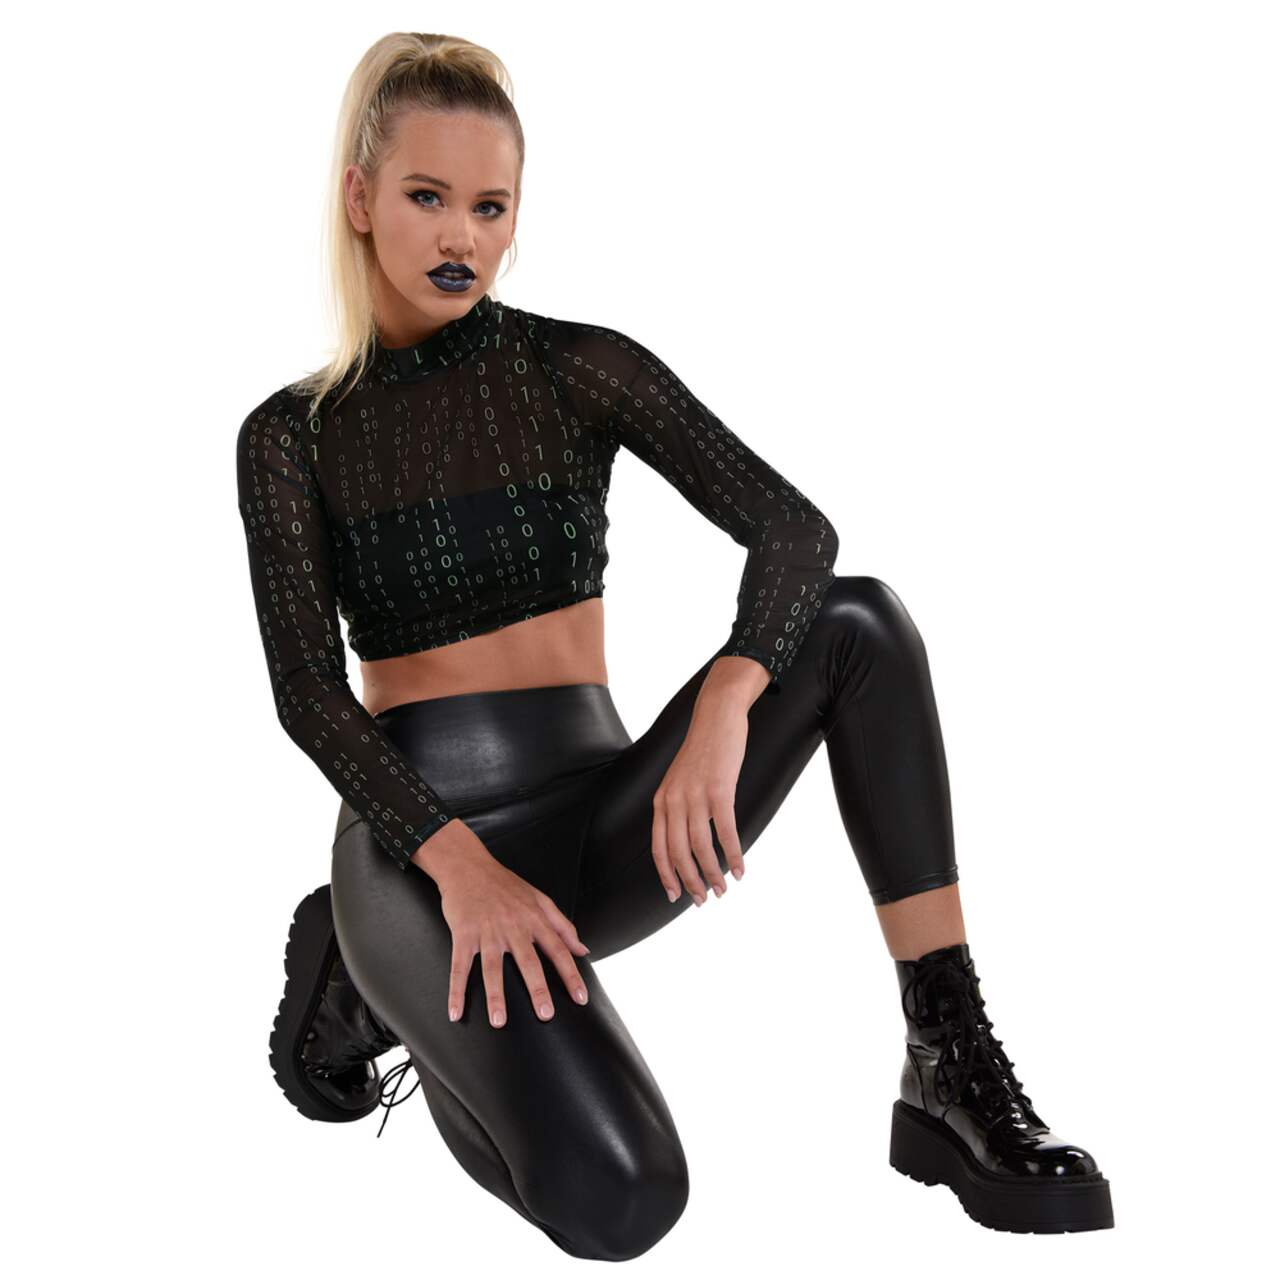 Cyberpunk Binary Code Mesh Top, Black, Assorted Sizes, Wearable